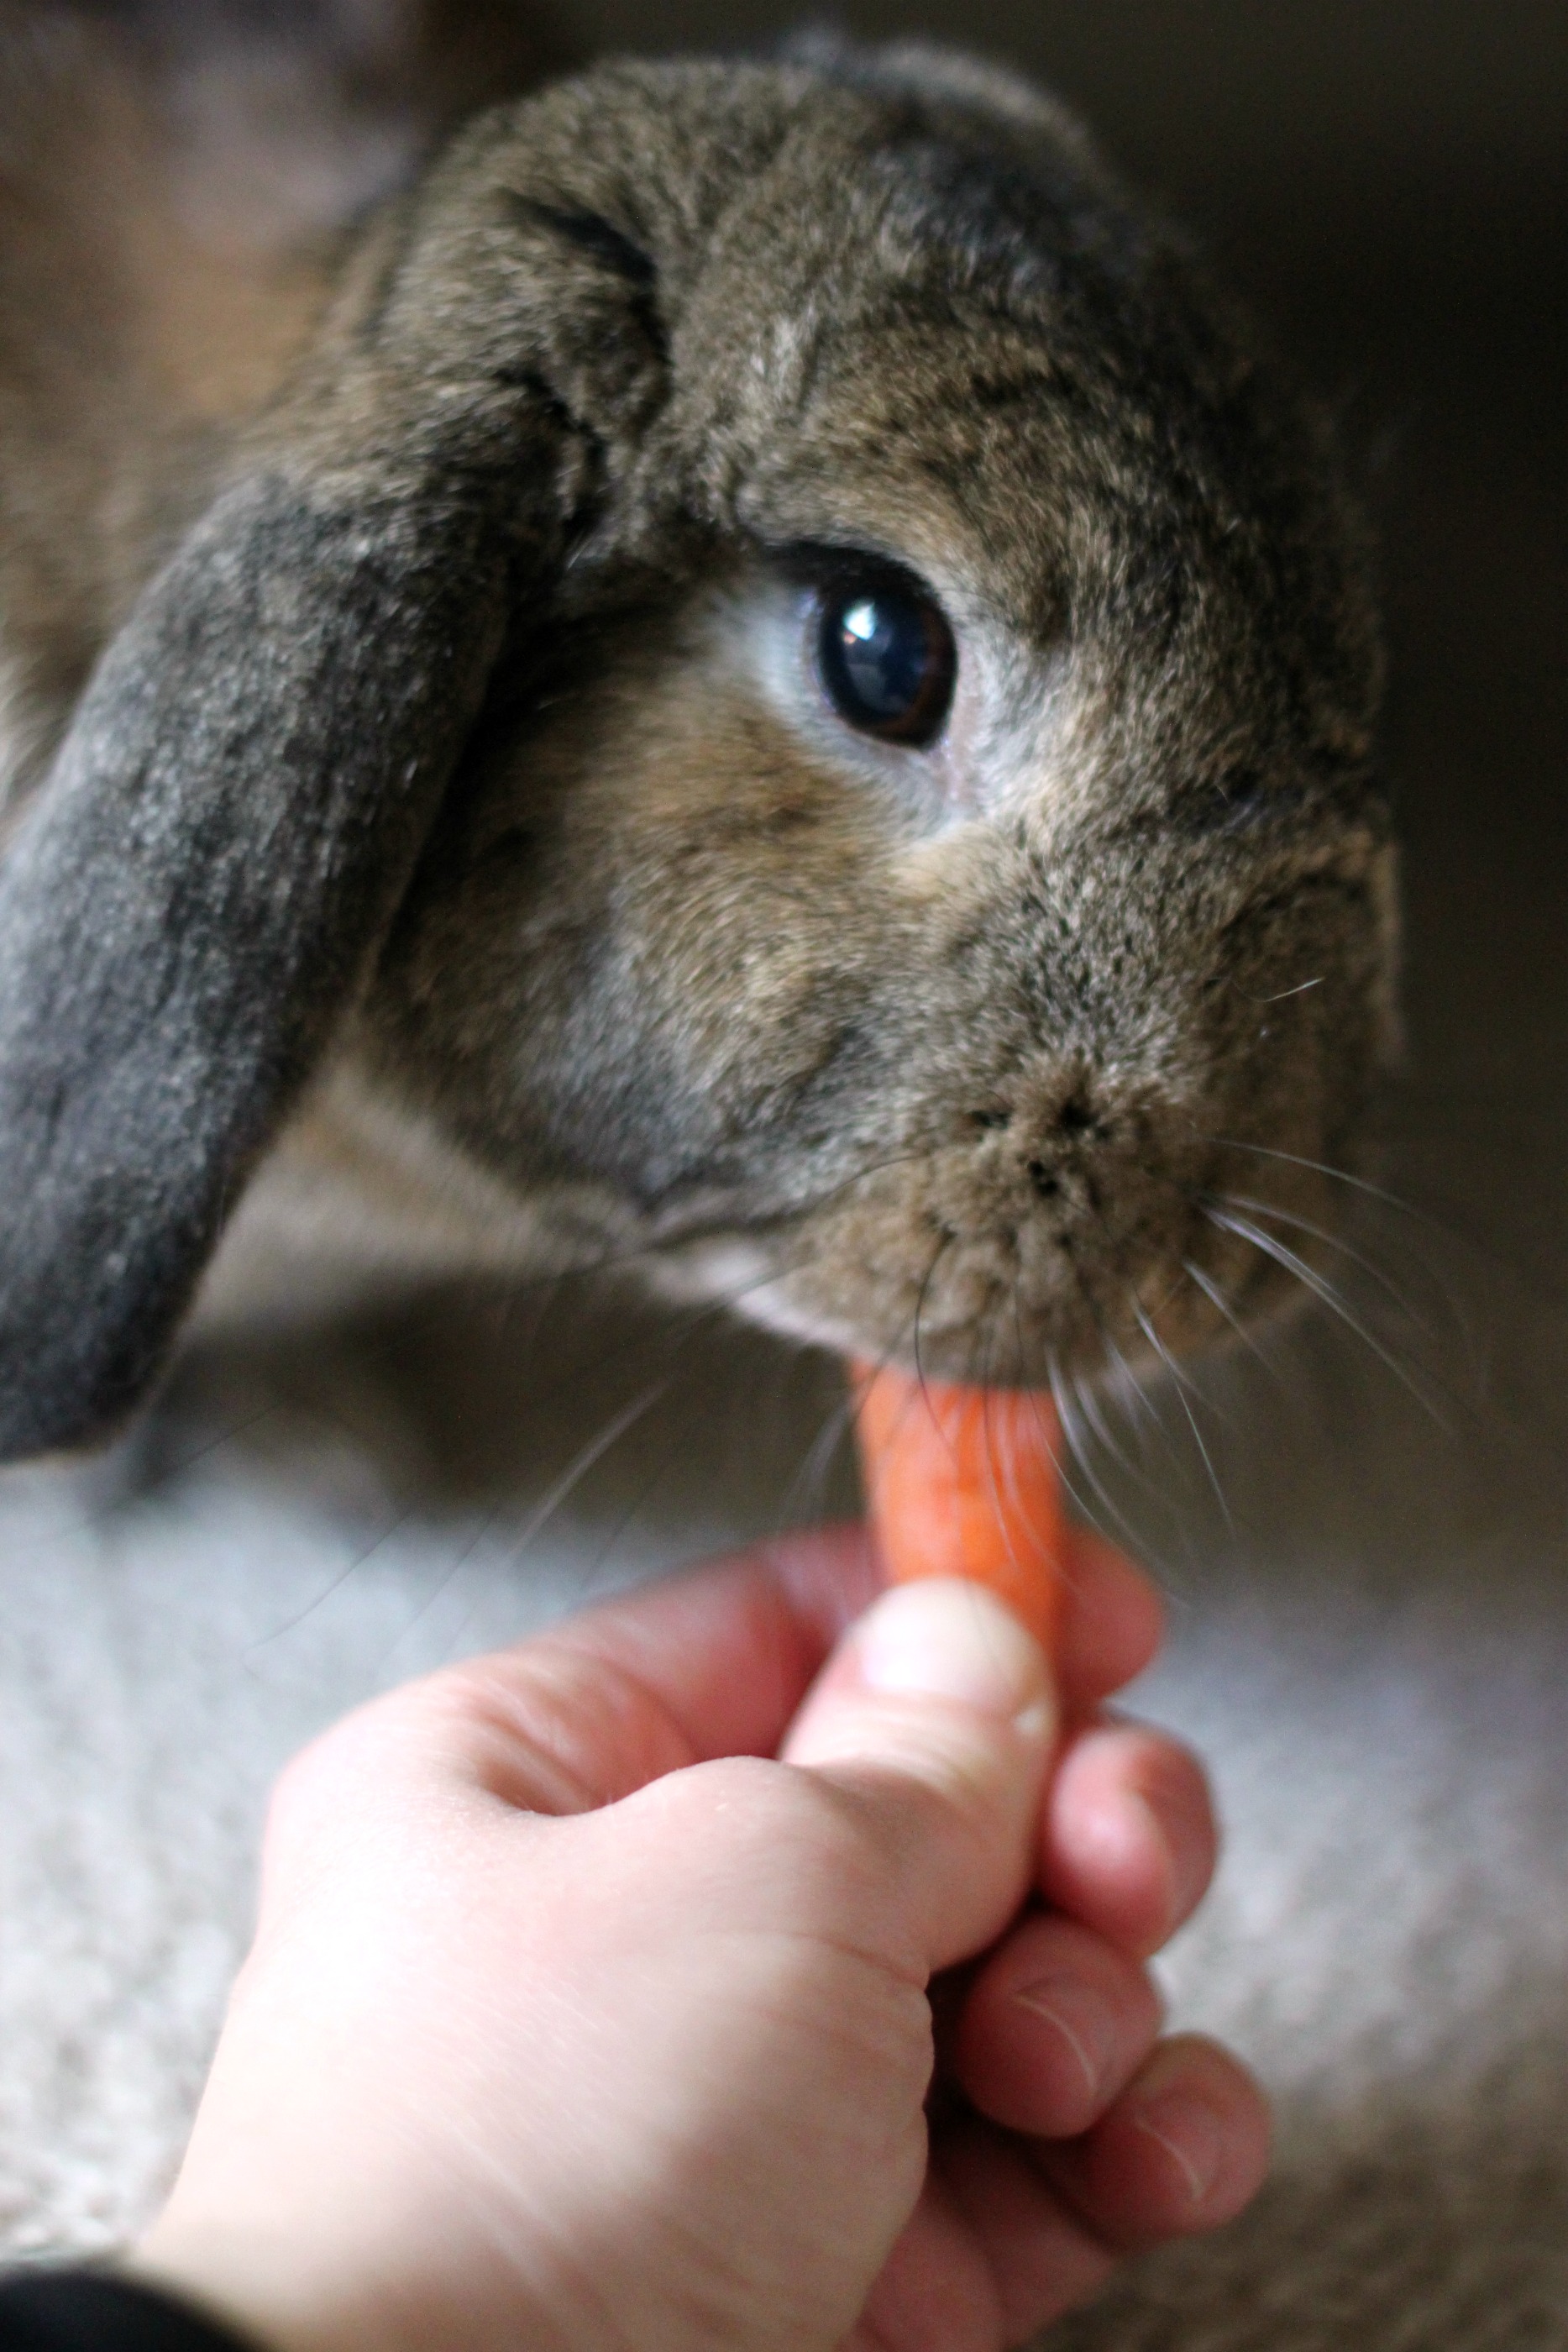 Cinnamon the bunny eating carrot